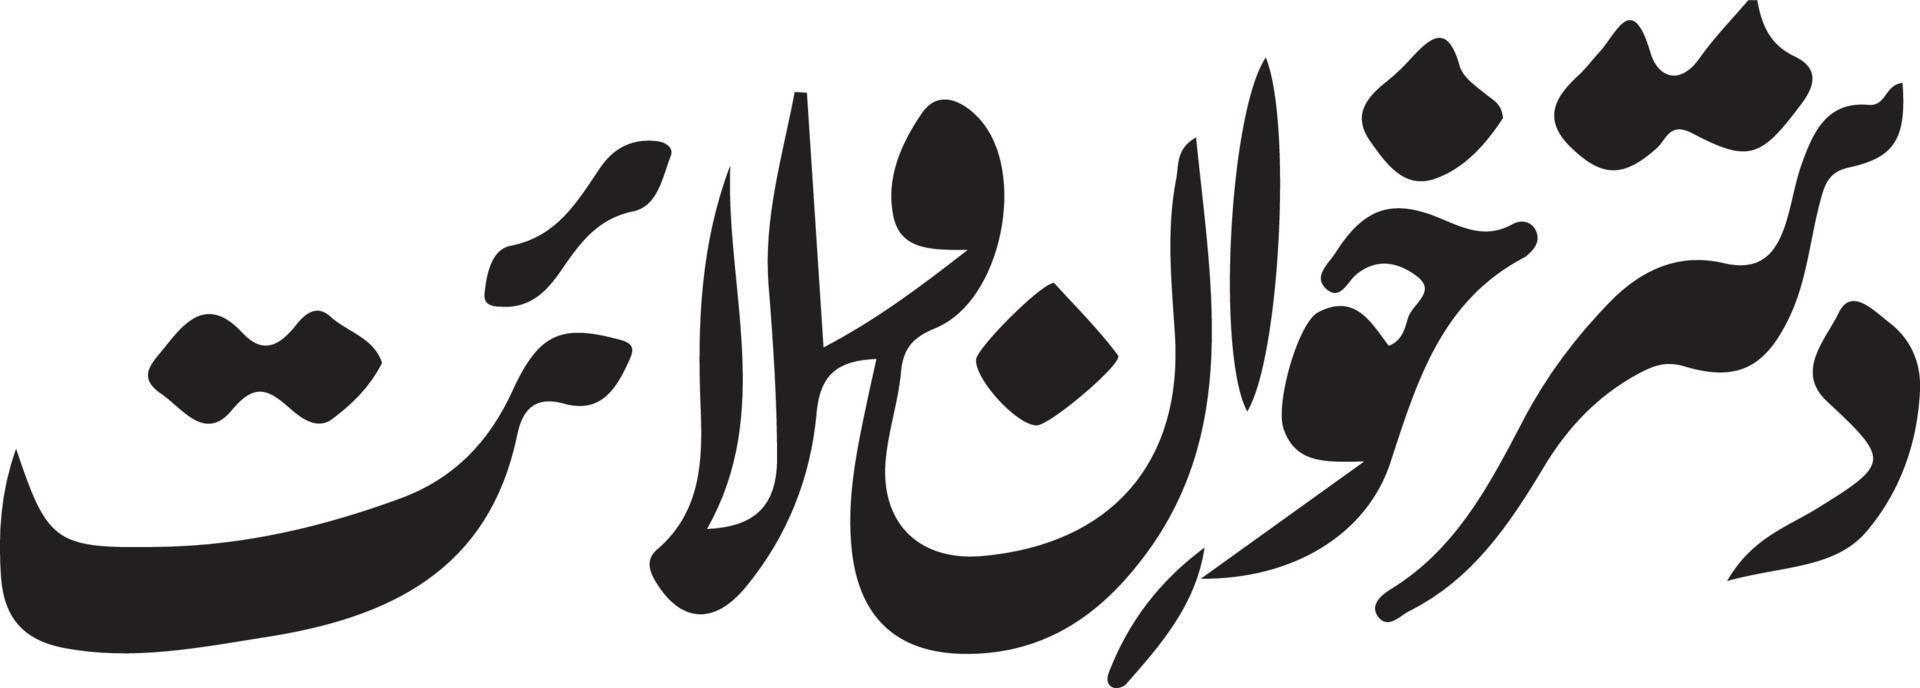 plumero khawan welayat islámico urdu caligrafía vector libre